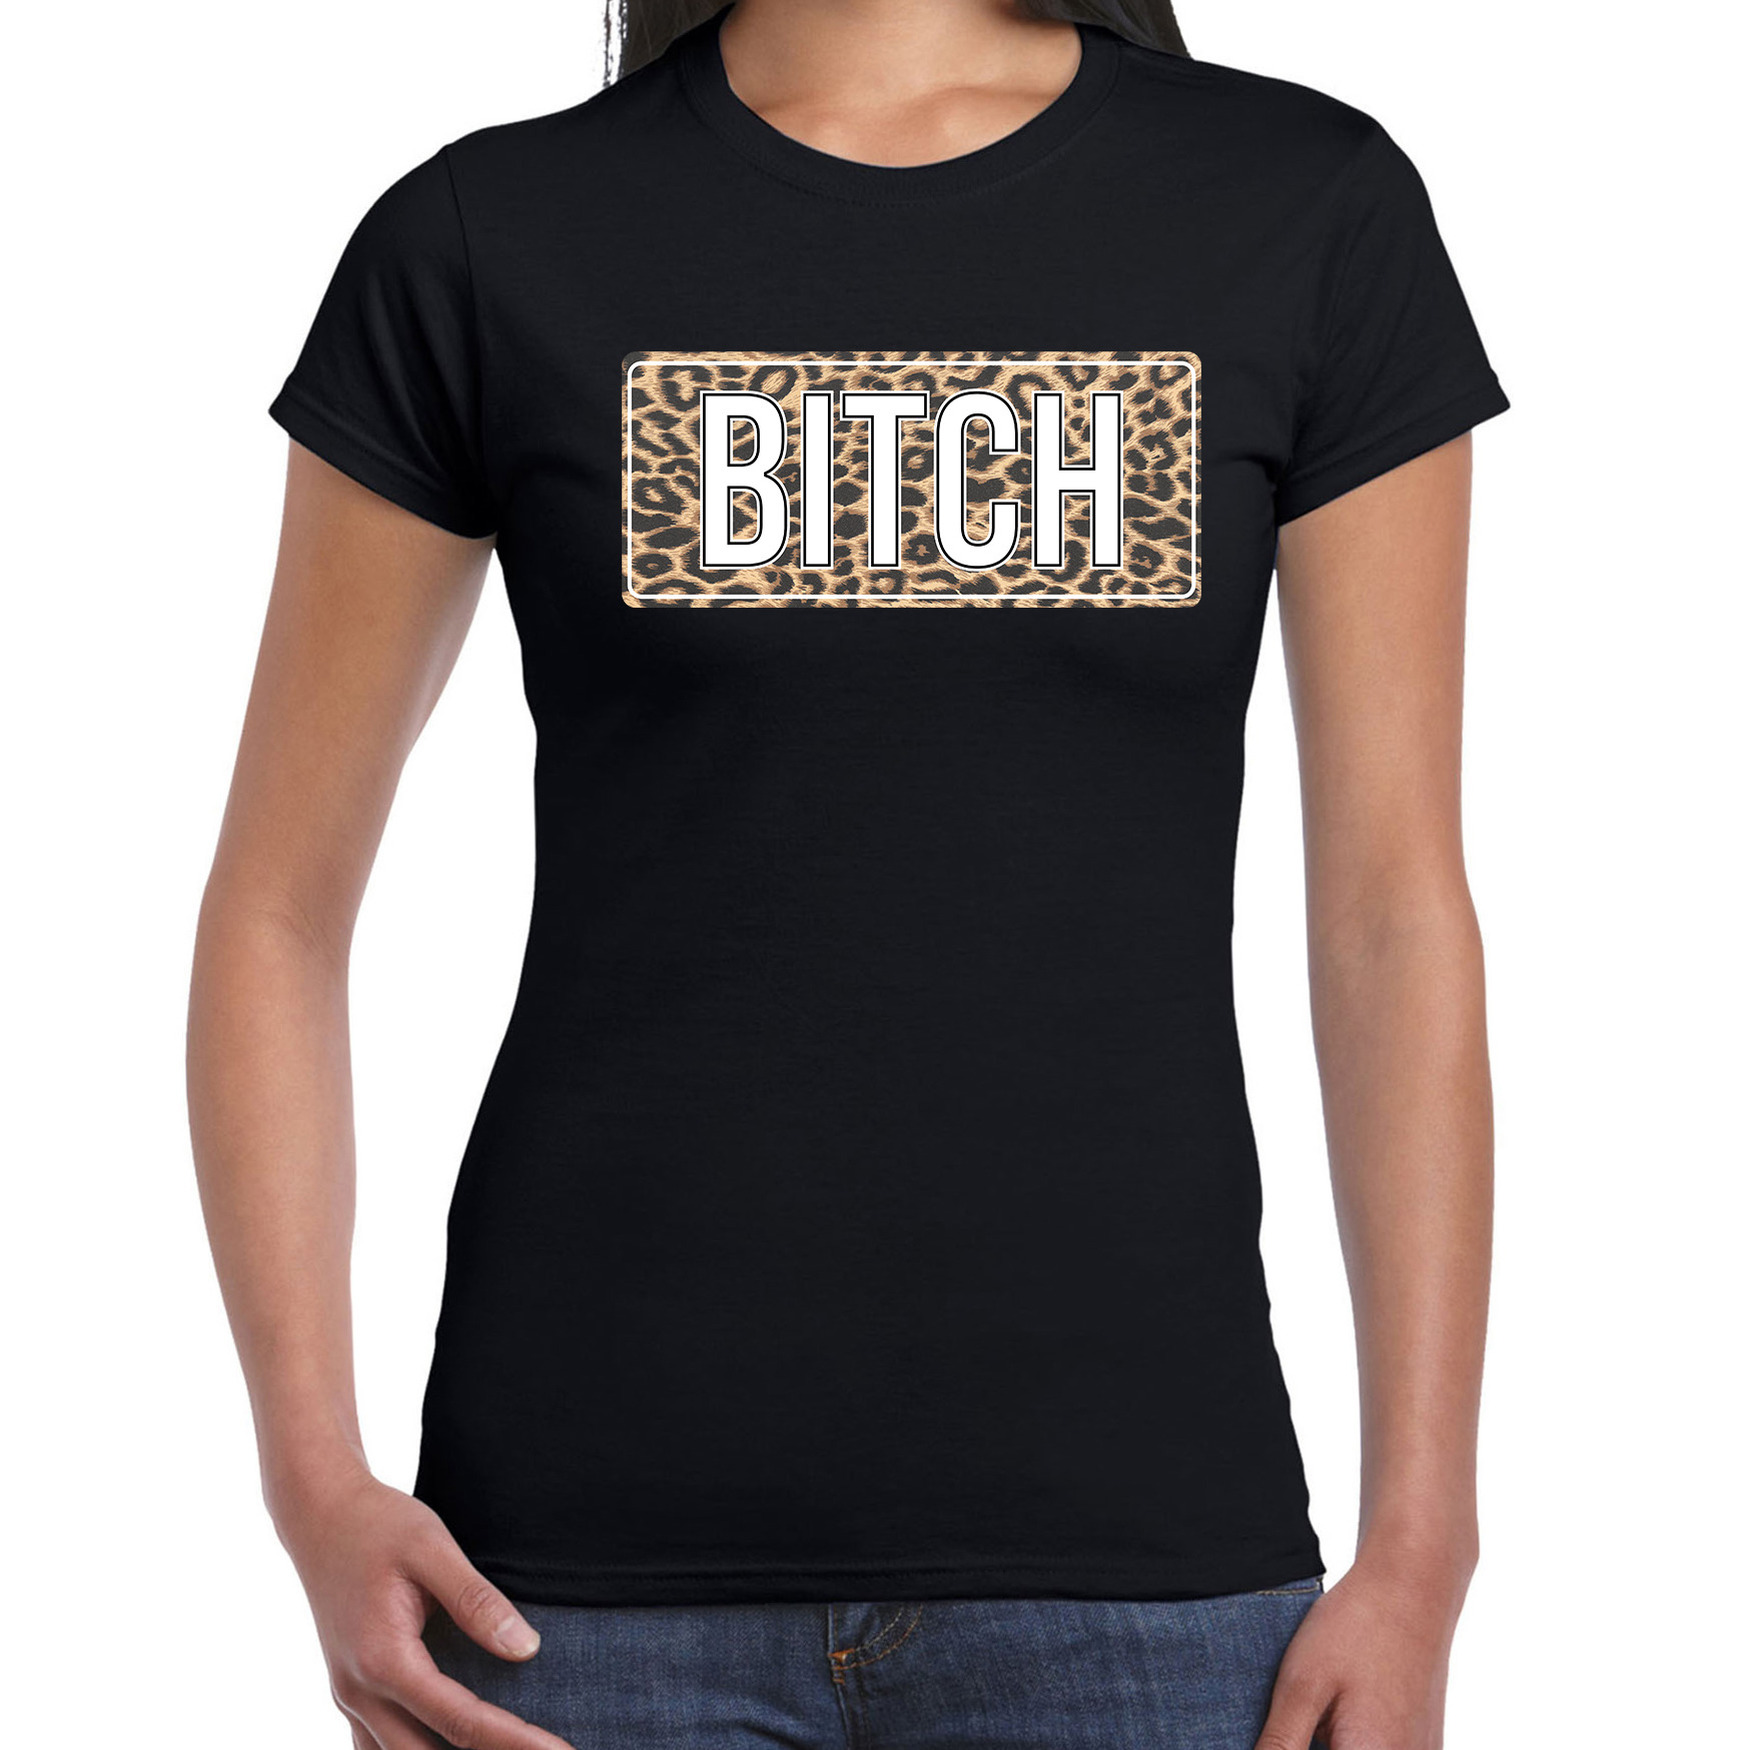 Bitch fun tekst t-shirt zwart voor dames